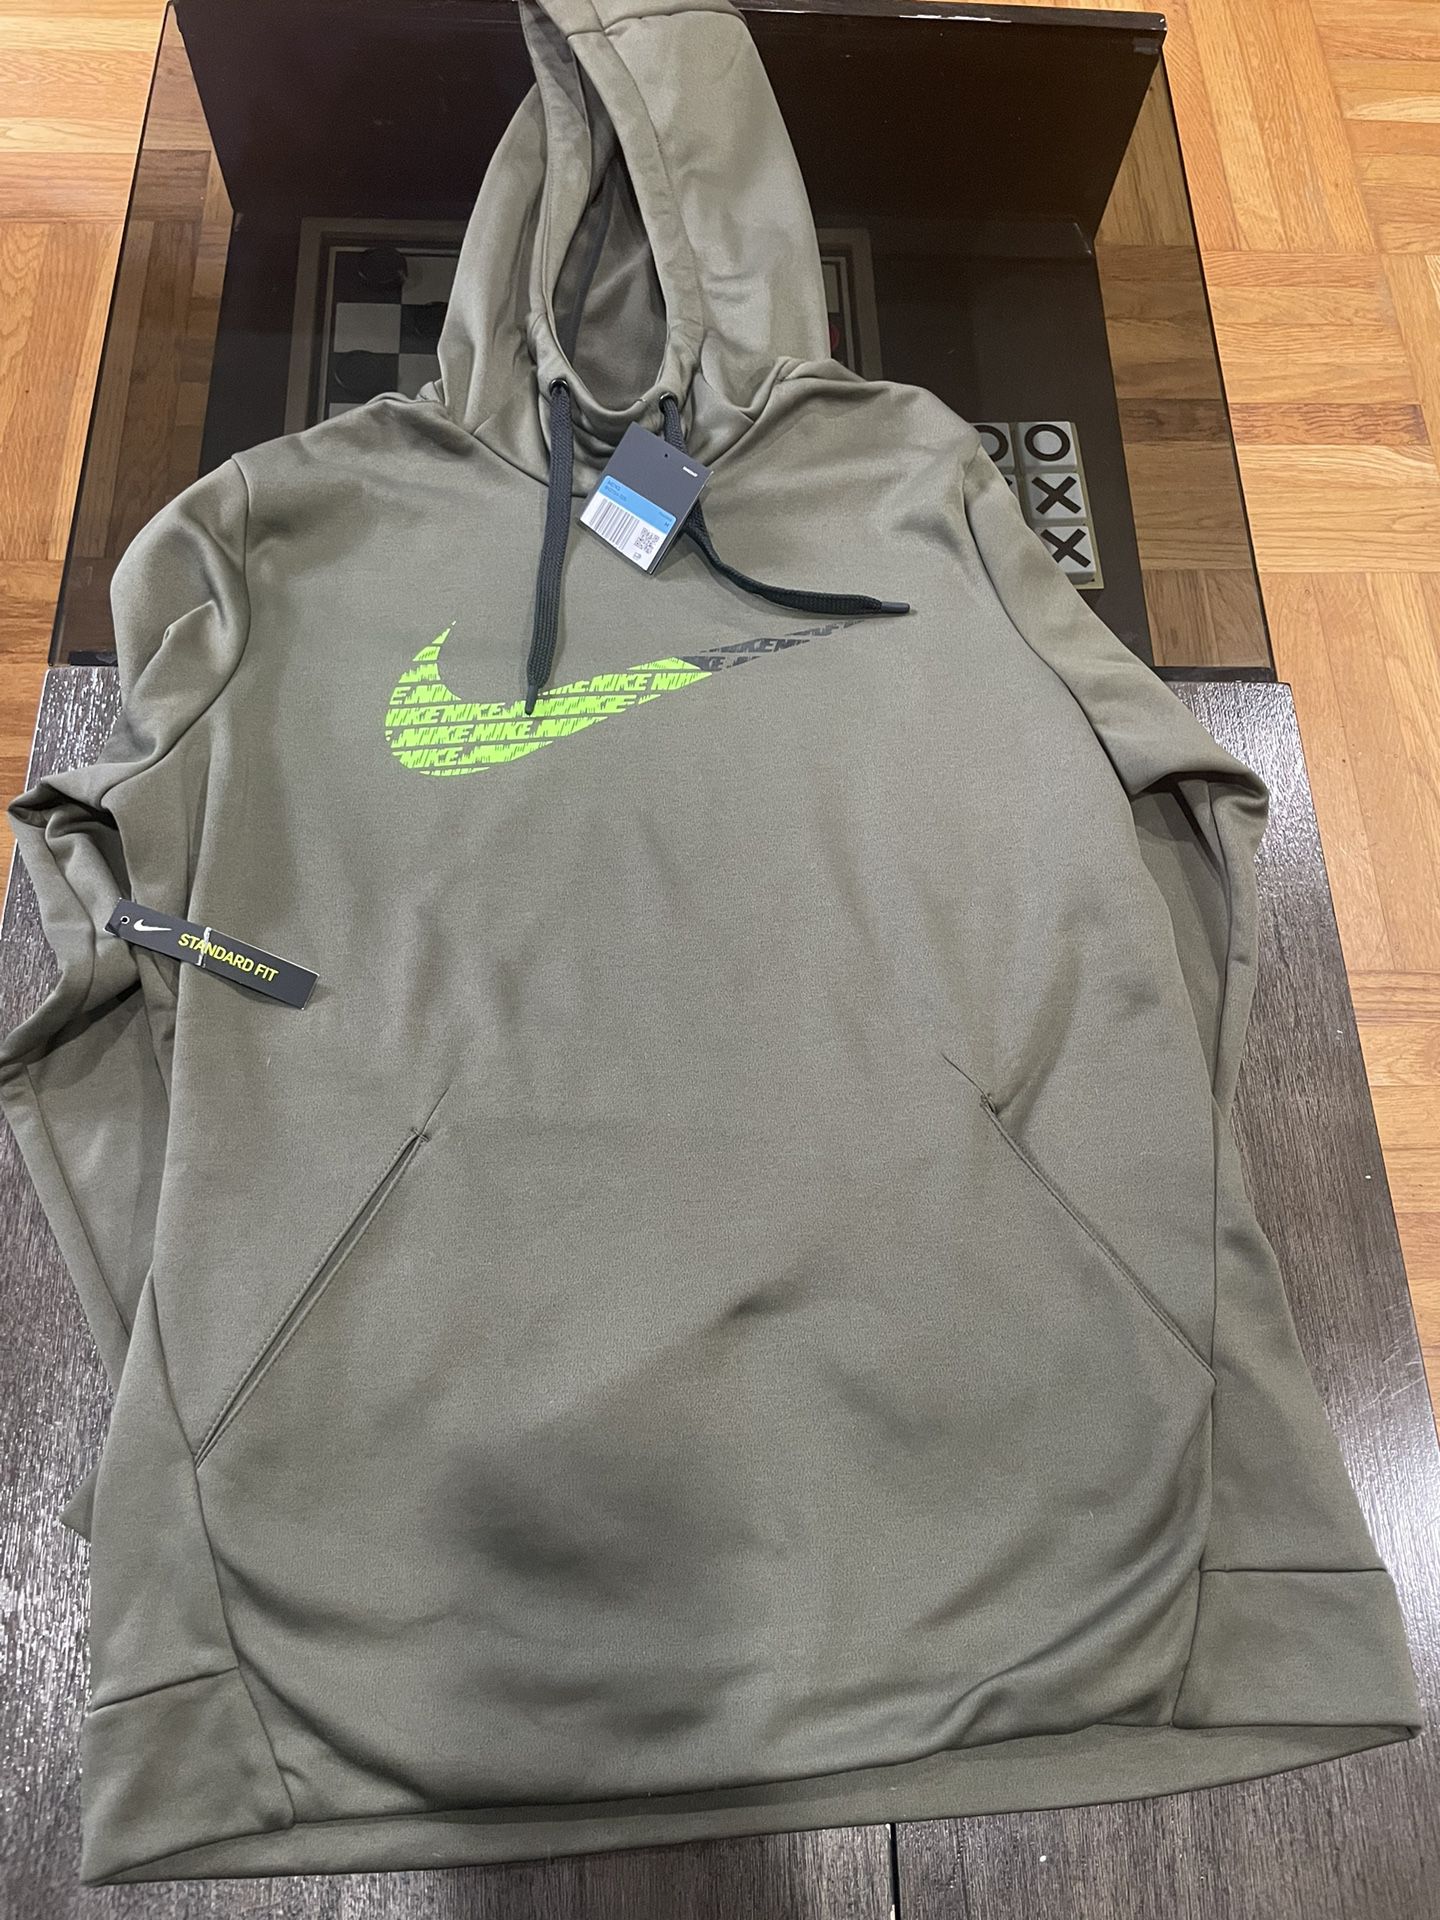 NEW Nike Men's Therma Fleece Training Pullover Hoodie - BV2784-325 sz Medium